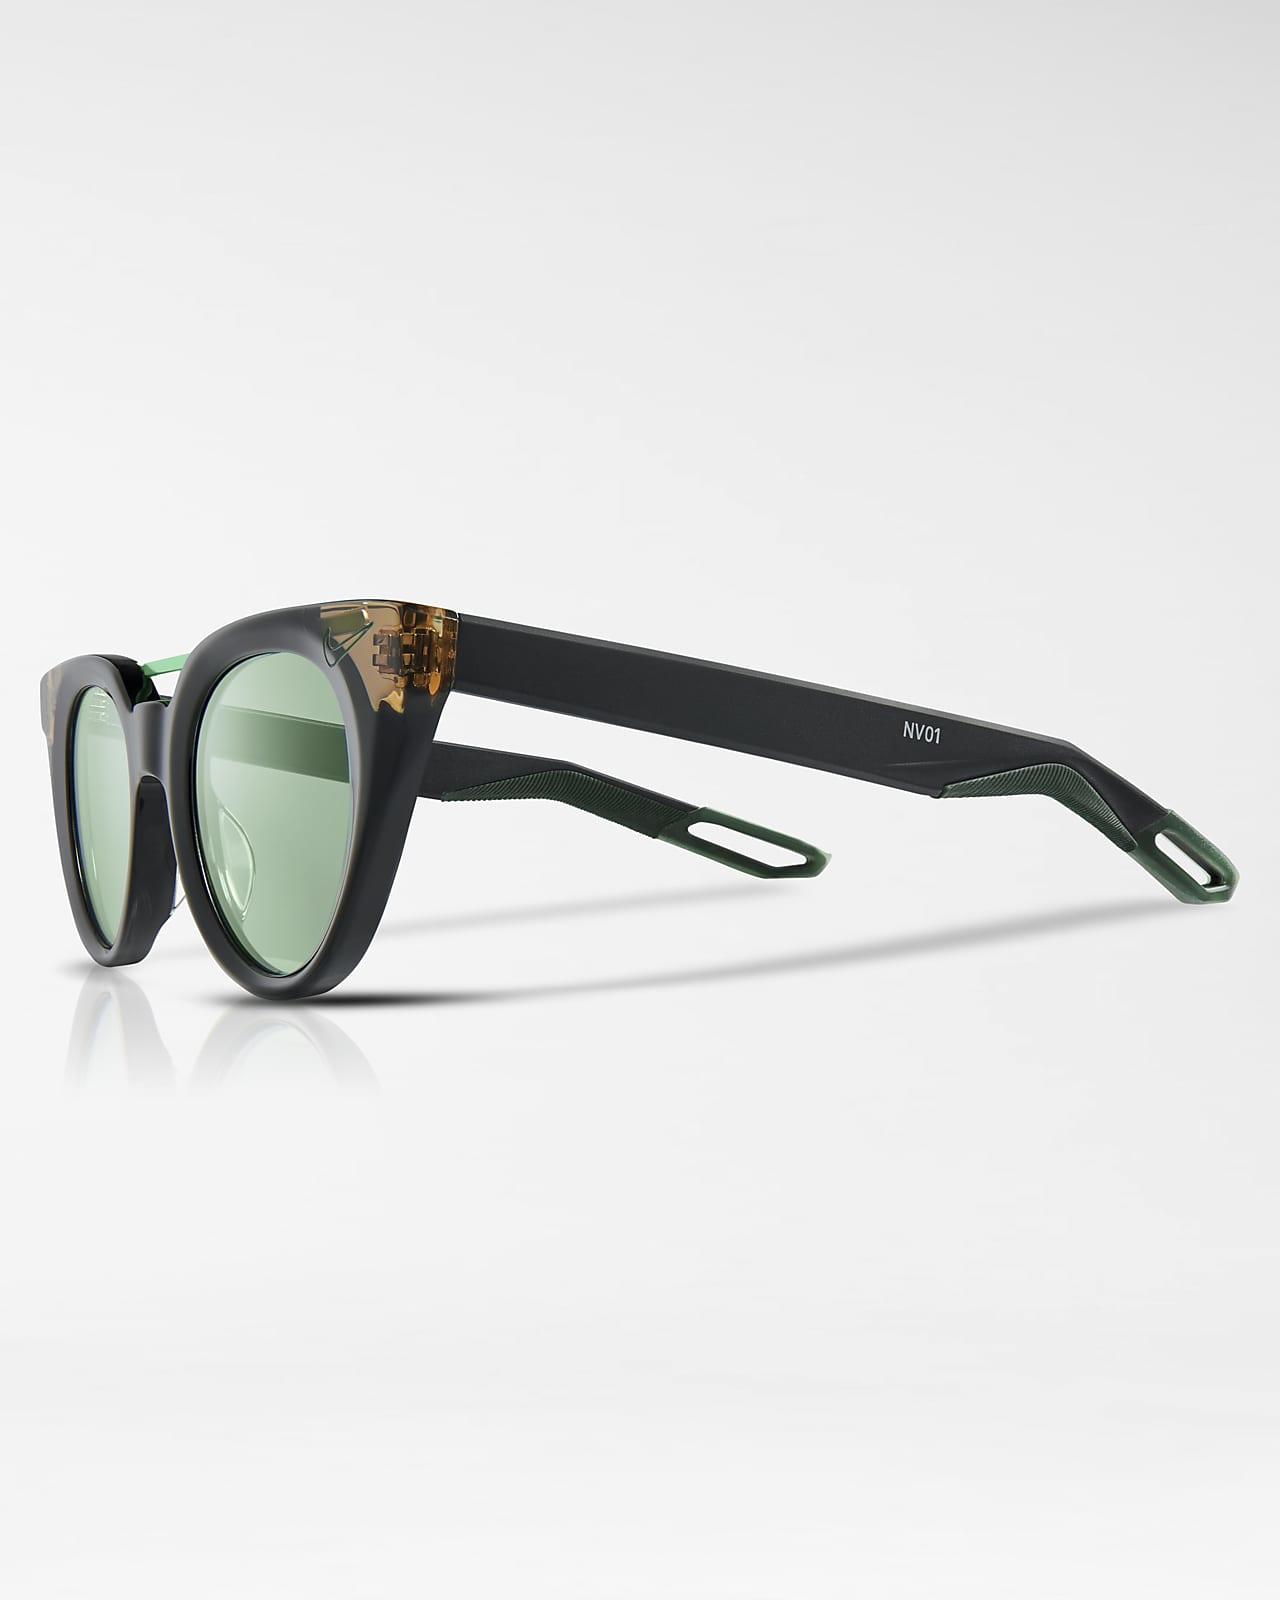 Nike NV01 sunglasses 